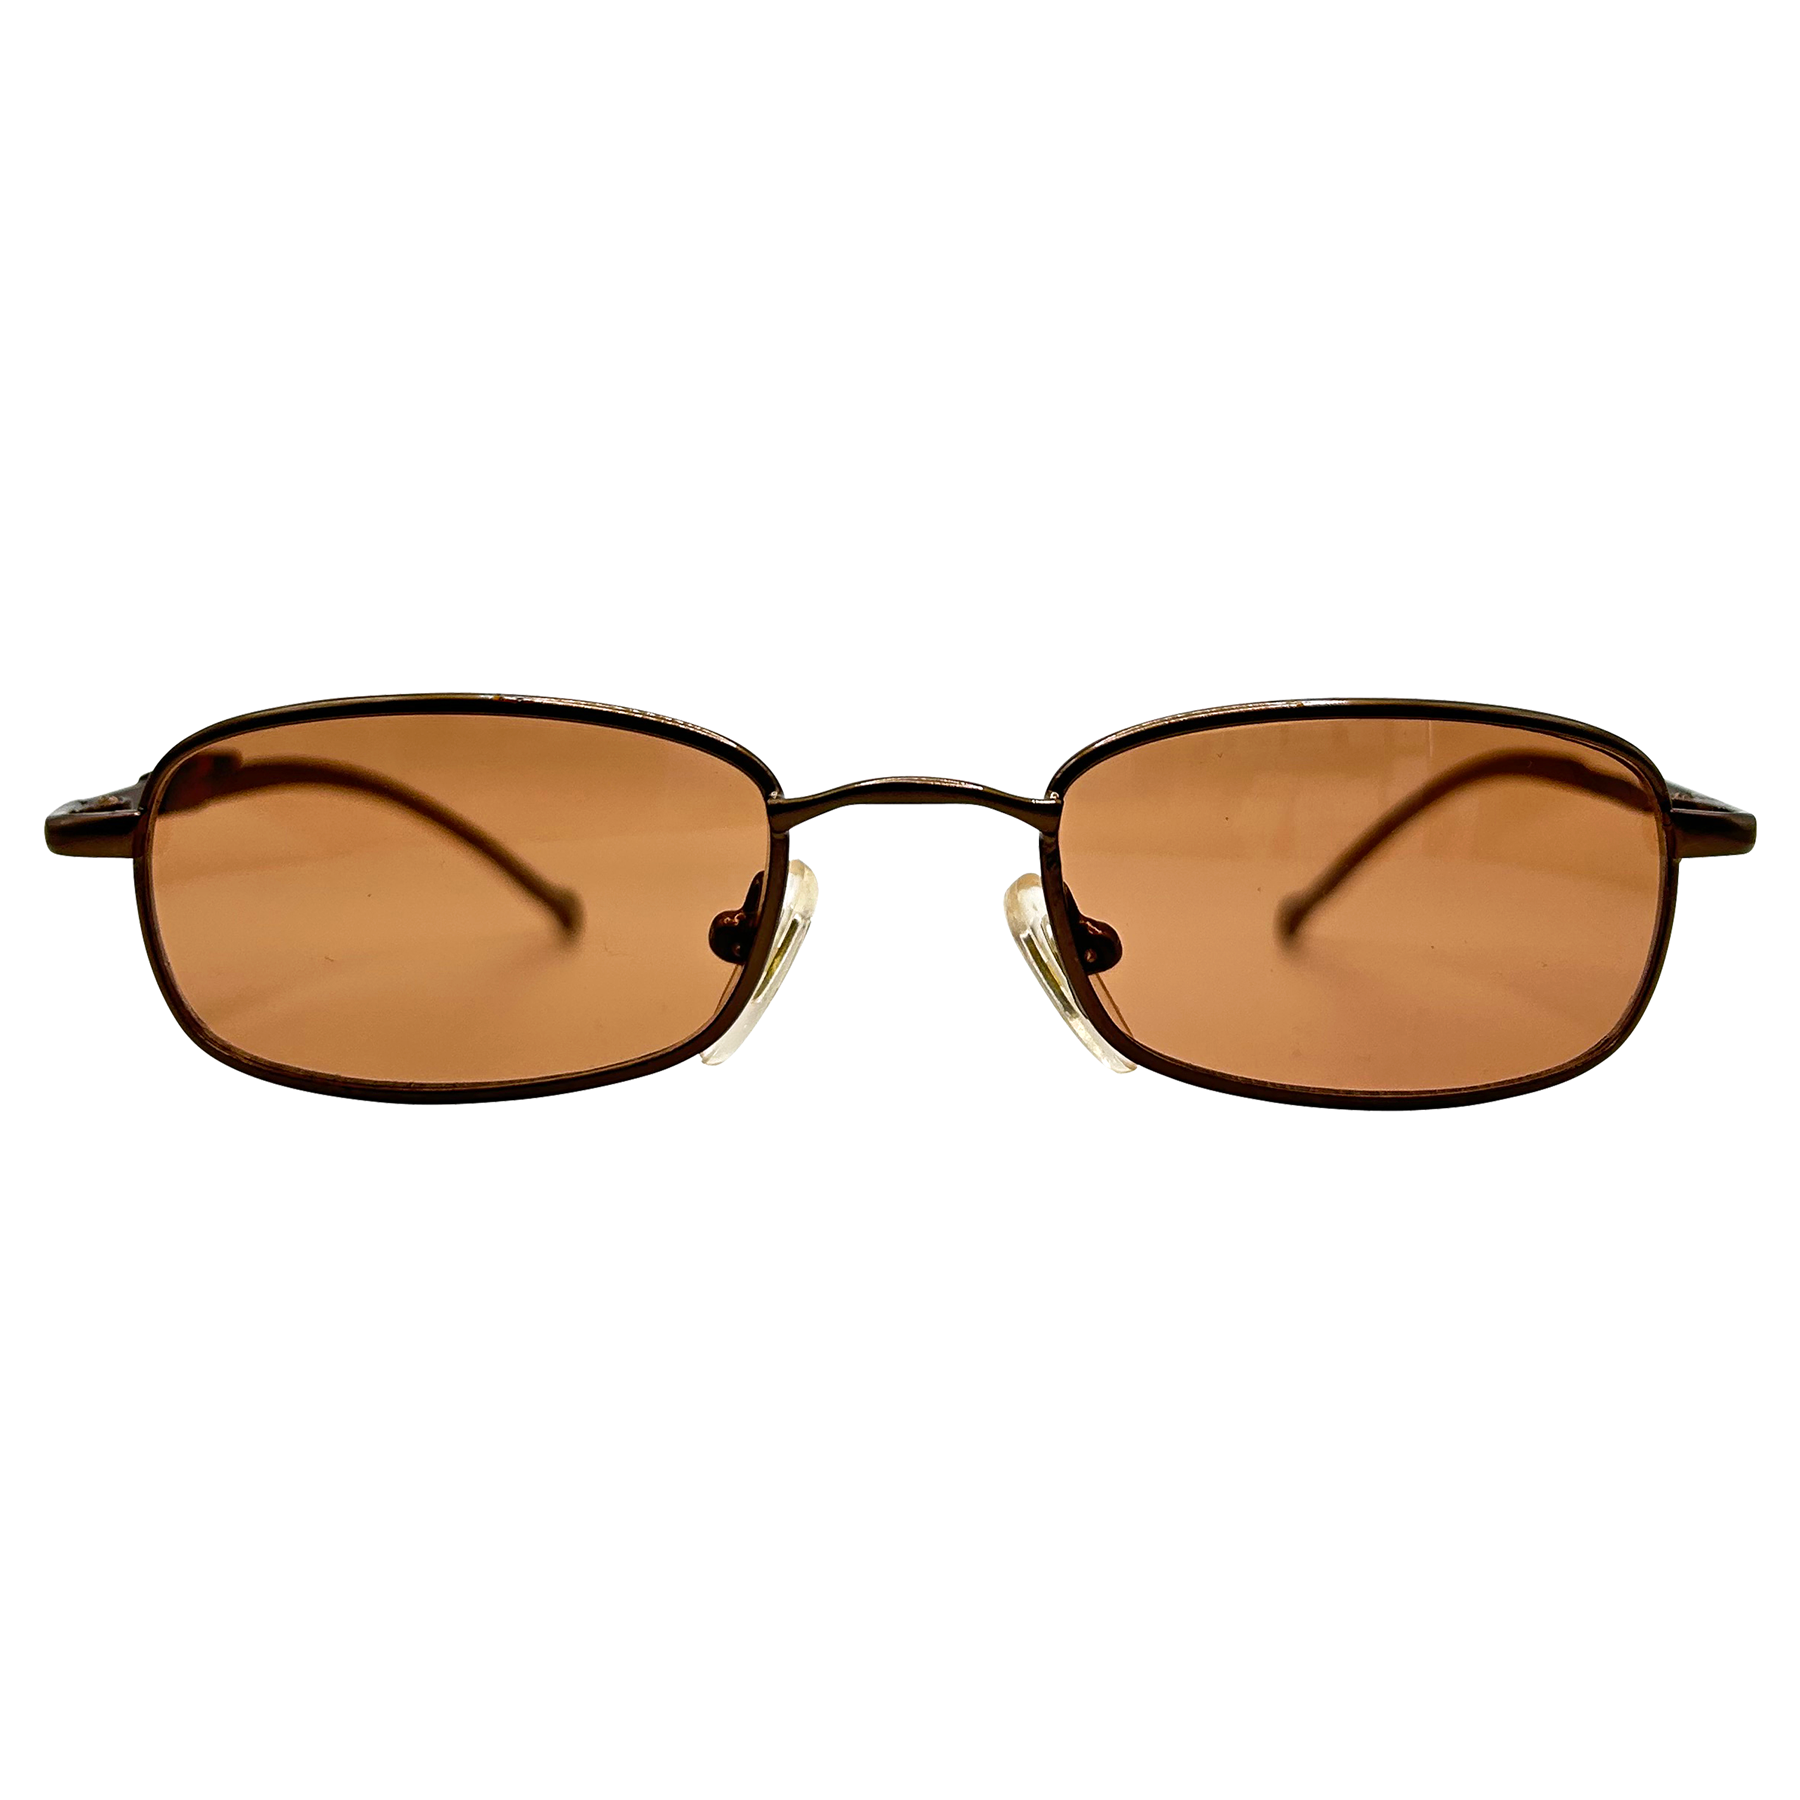 TINZY Tiny Square 90s Sunglasses | Blue-Blocker | Day Driving